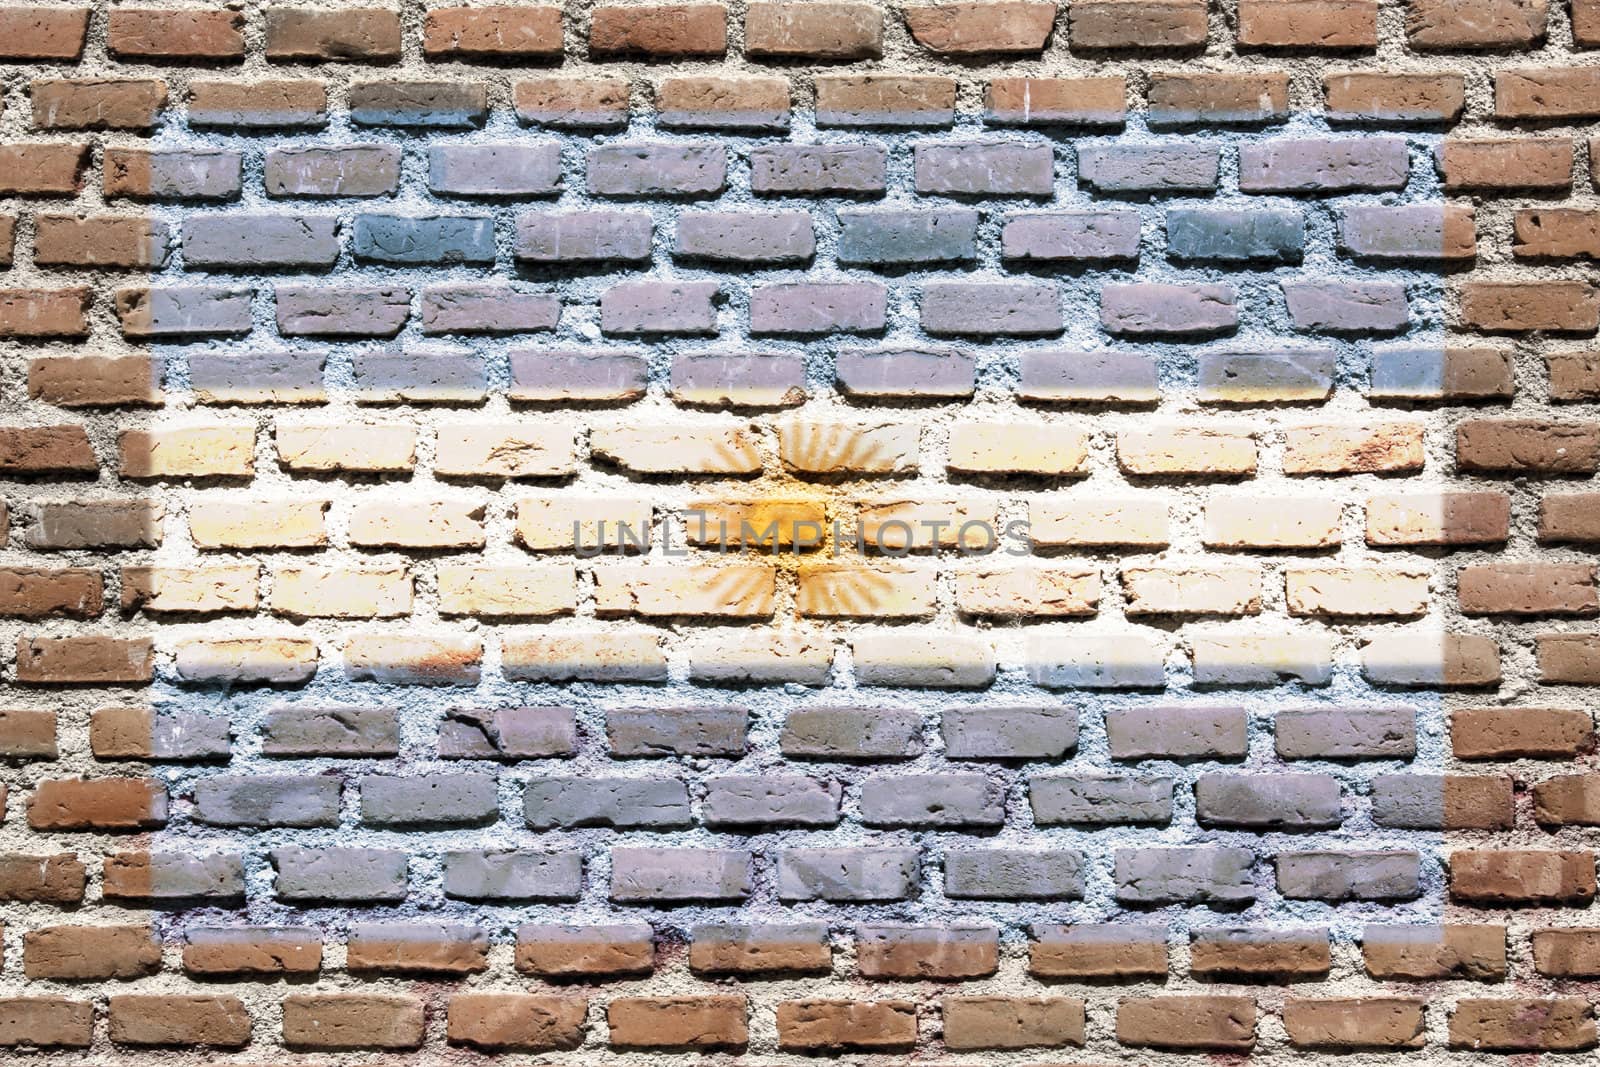 Argentina national flag spray painted on a brick wall. Grunge graffiti.